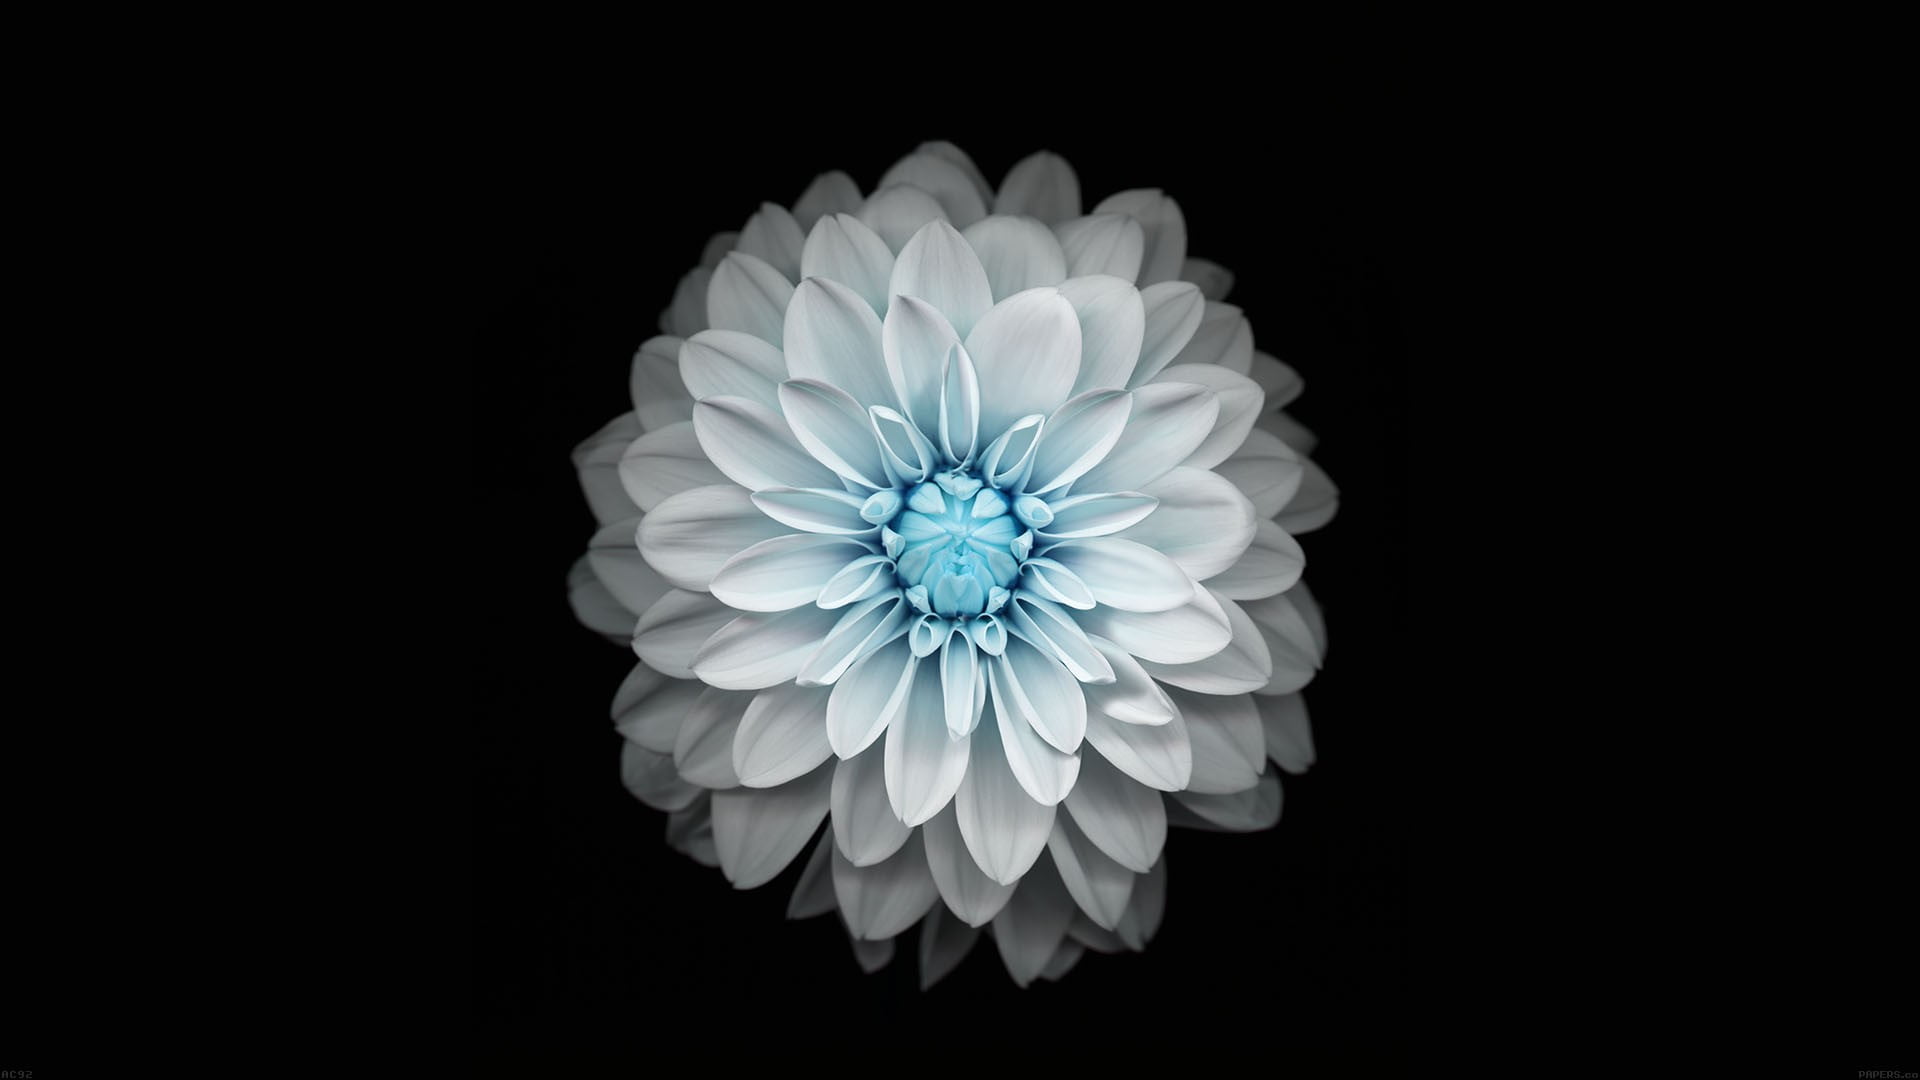 Blue Flower Black Background Wallpaper